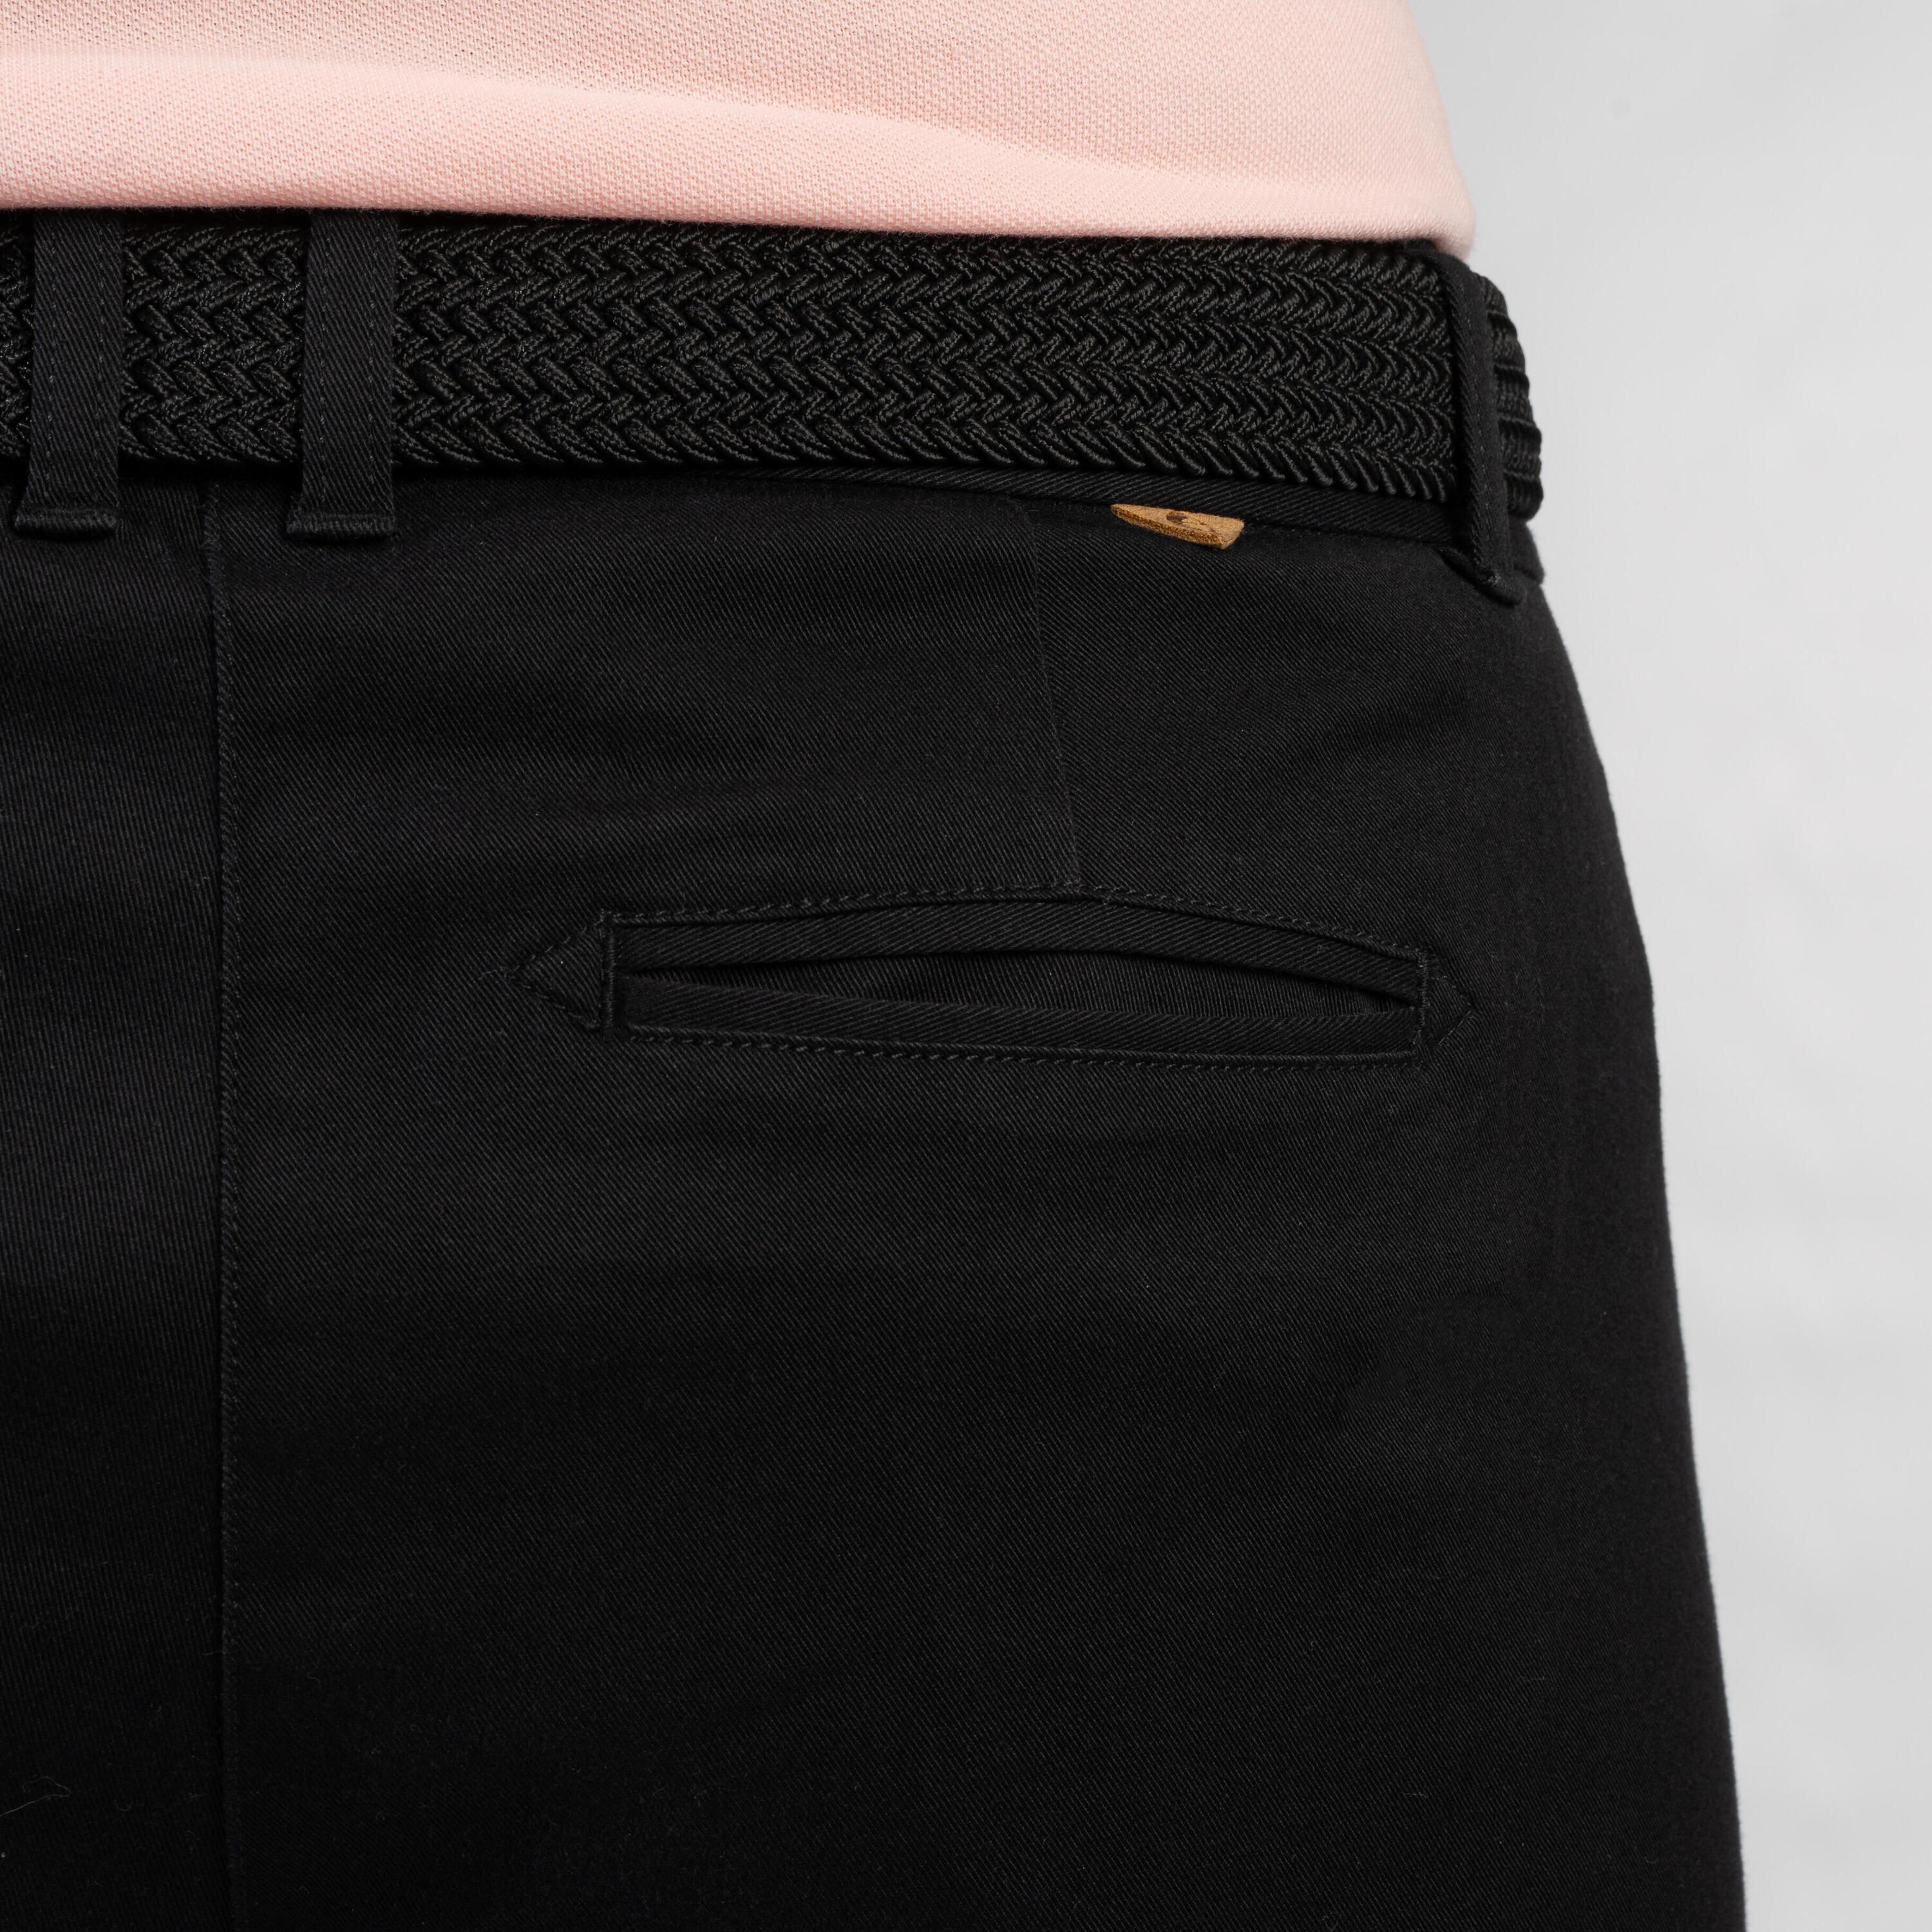 Women's Golf Trousers - MW500 Black 4/6